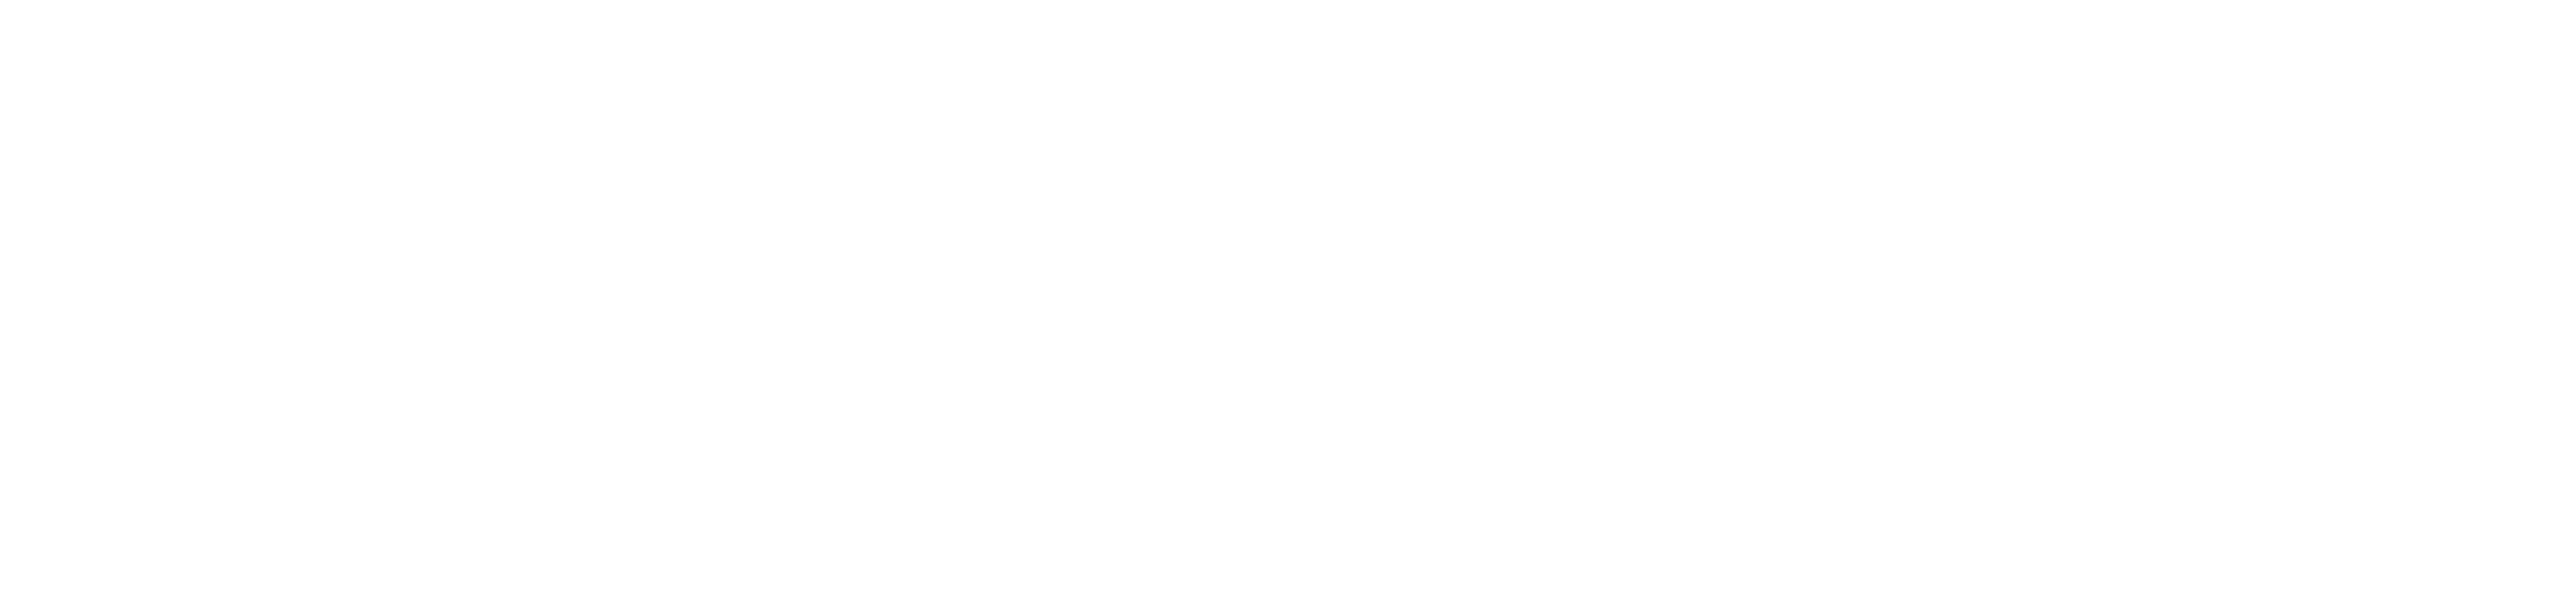 Senator Logo - Home | U.S. Senator Todd Young of Indiana